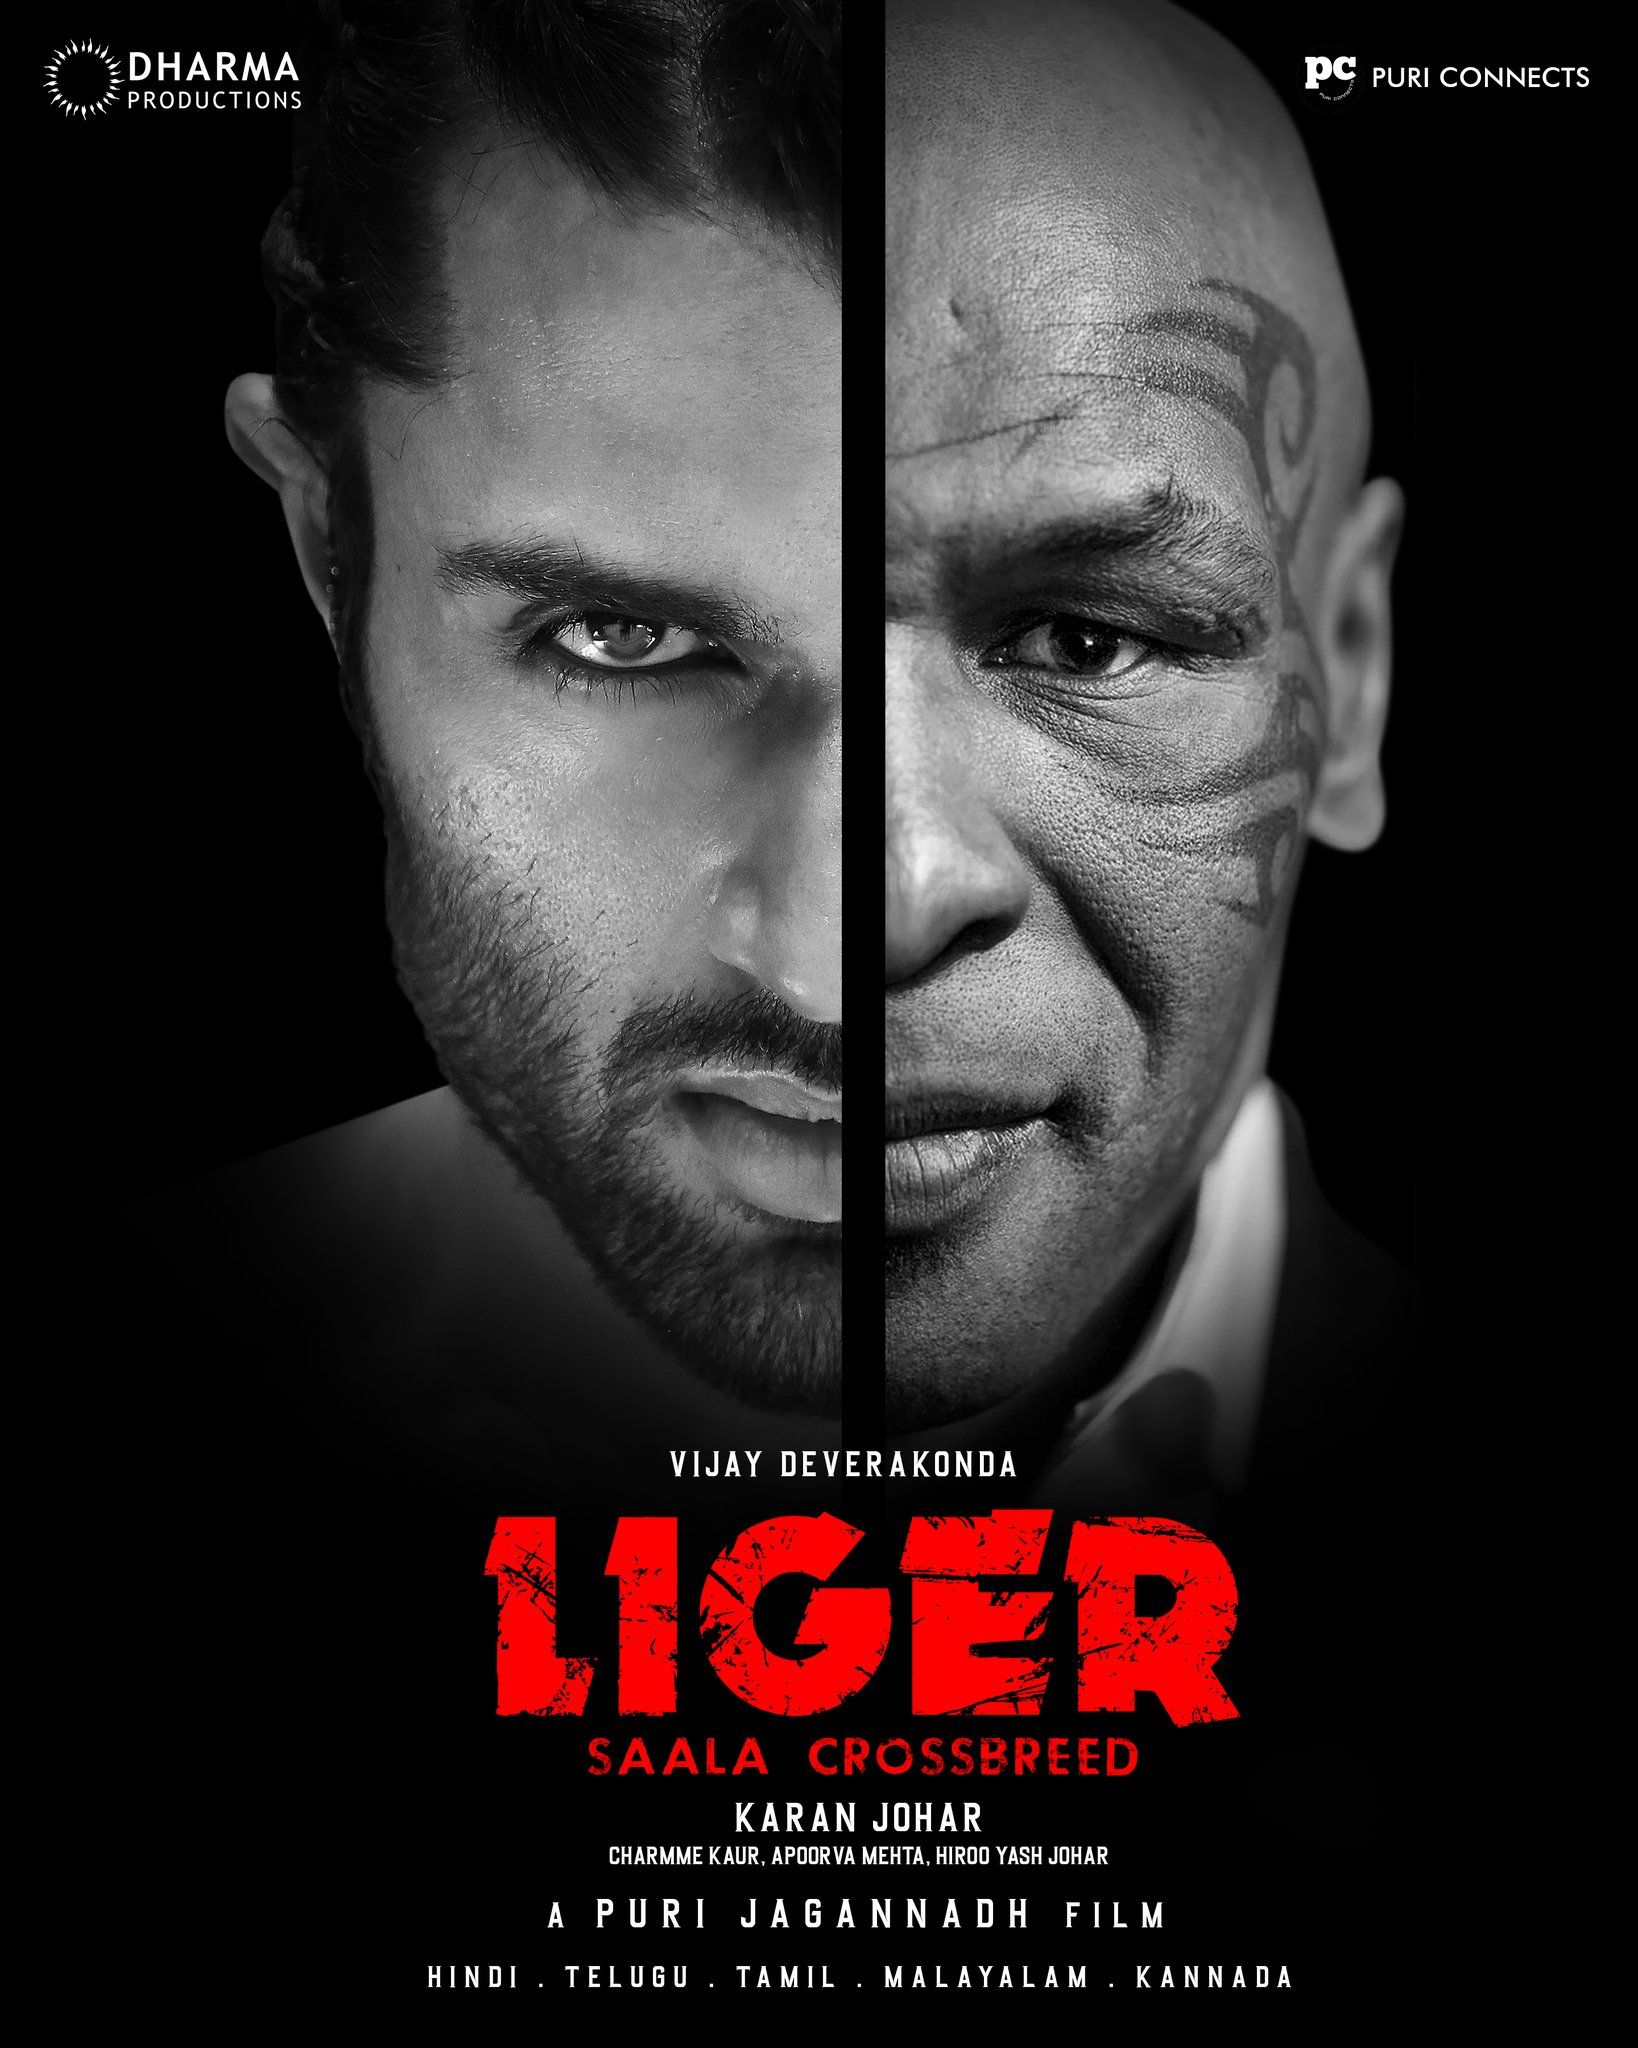 Boxing legend Mike Tyson to feature in Vijay Deverakondas ‘Liger’